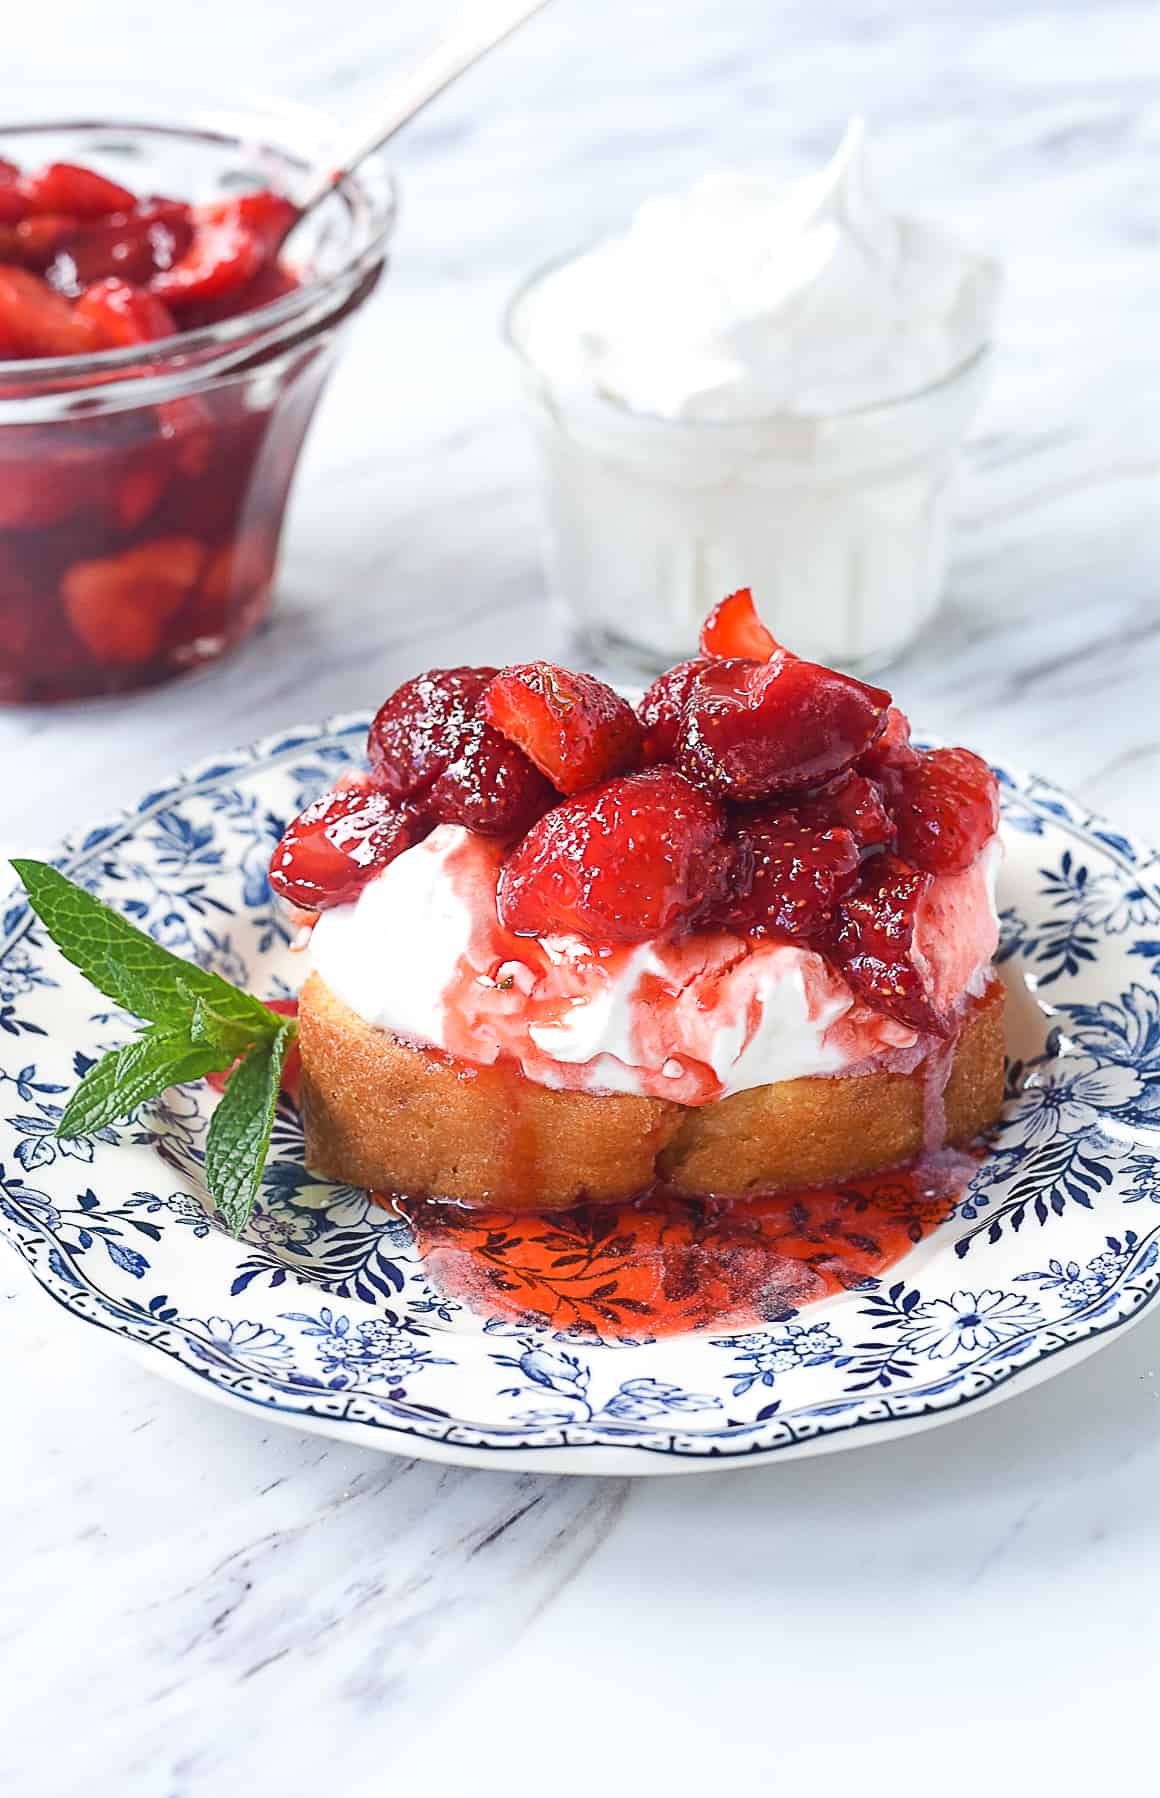 sttrawberry shortcake on plate